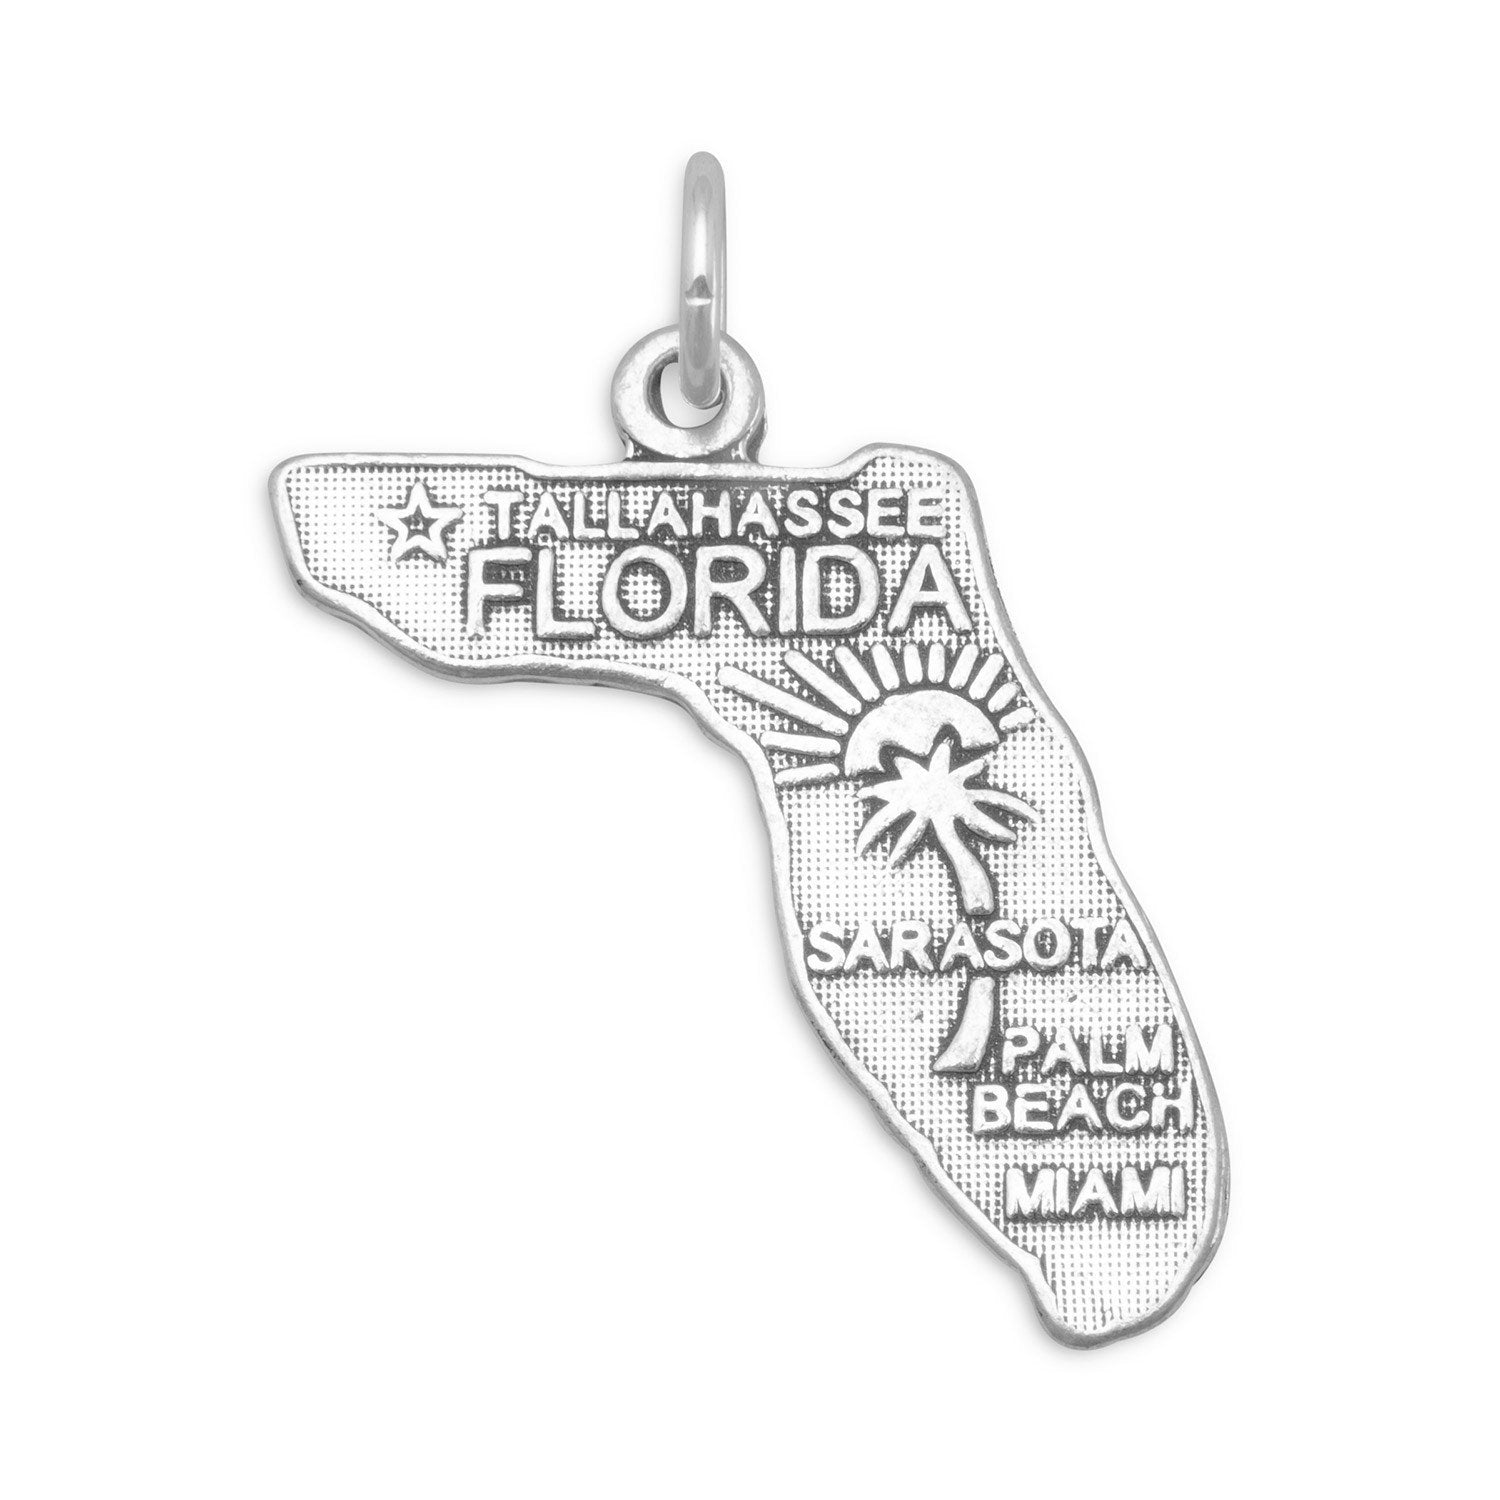 Florida State Charm